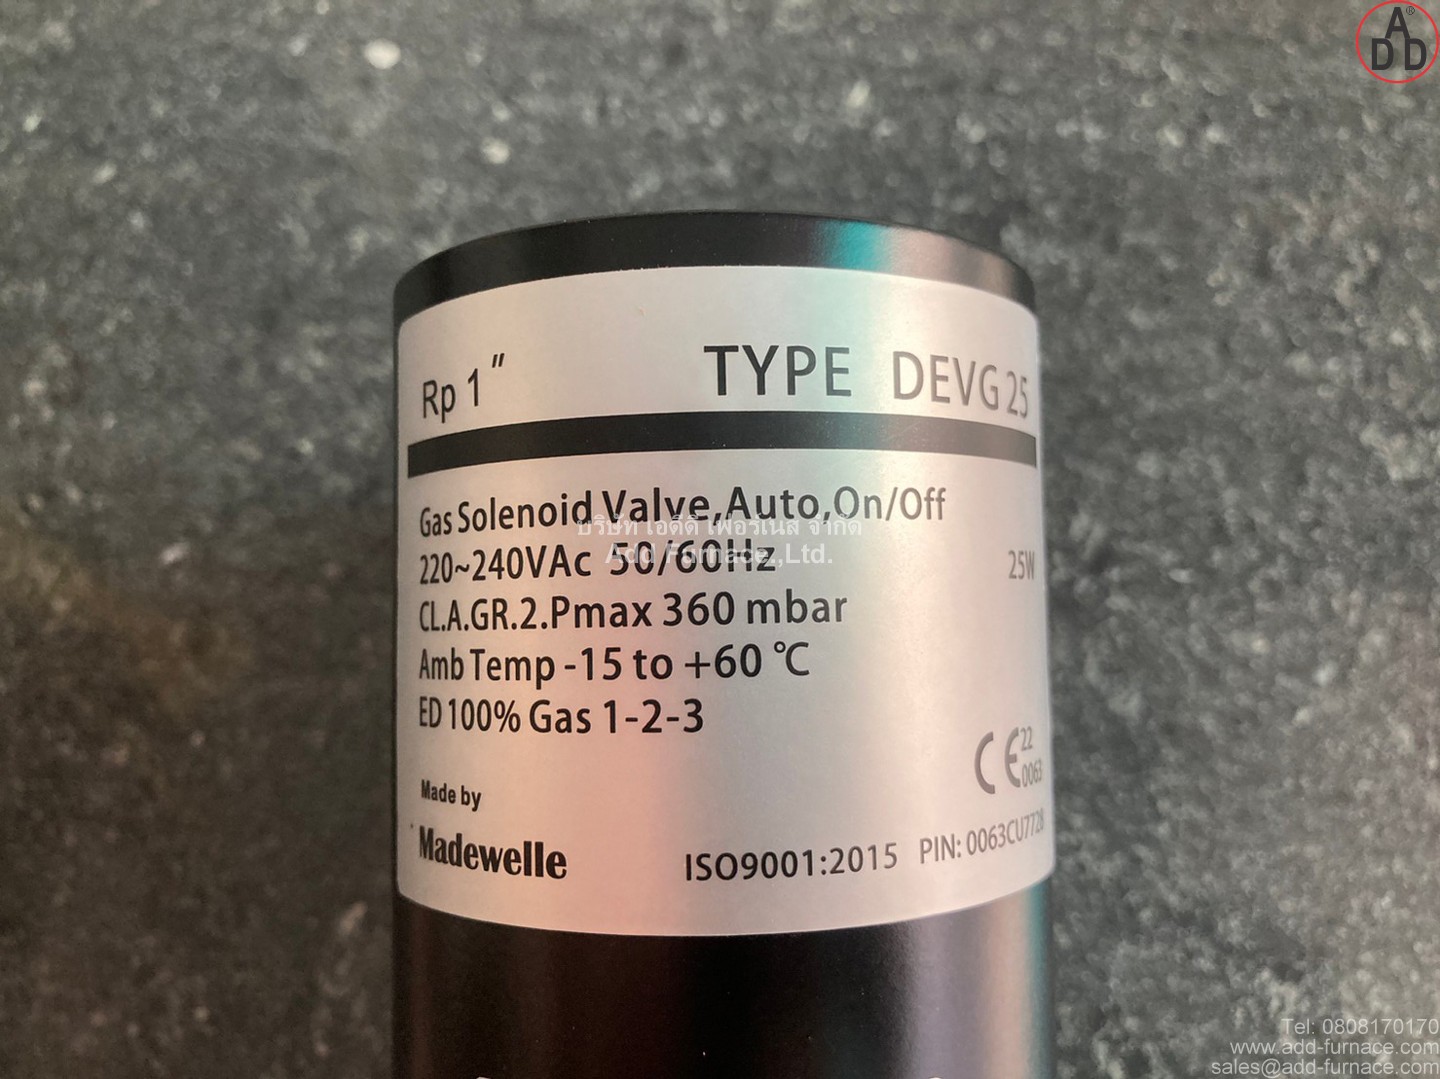 Gas Solenoid Valve Type DEVG 25 (2)